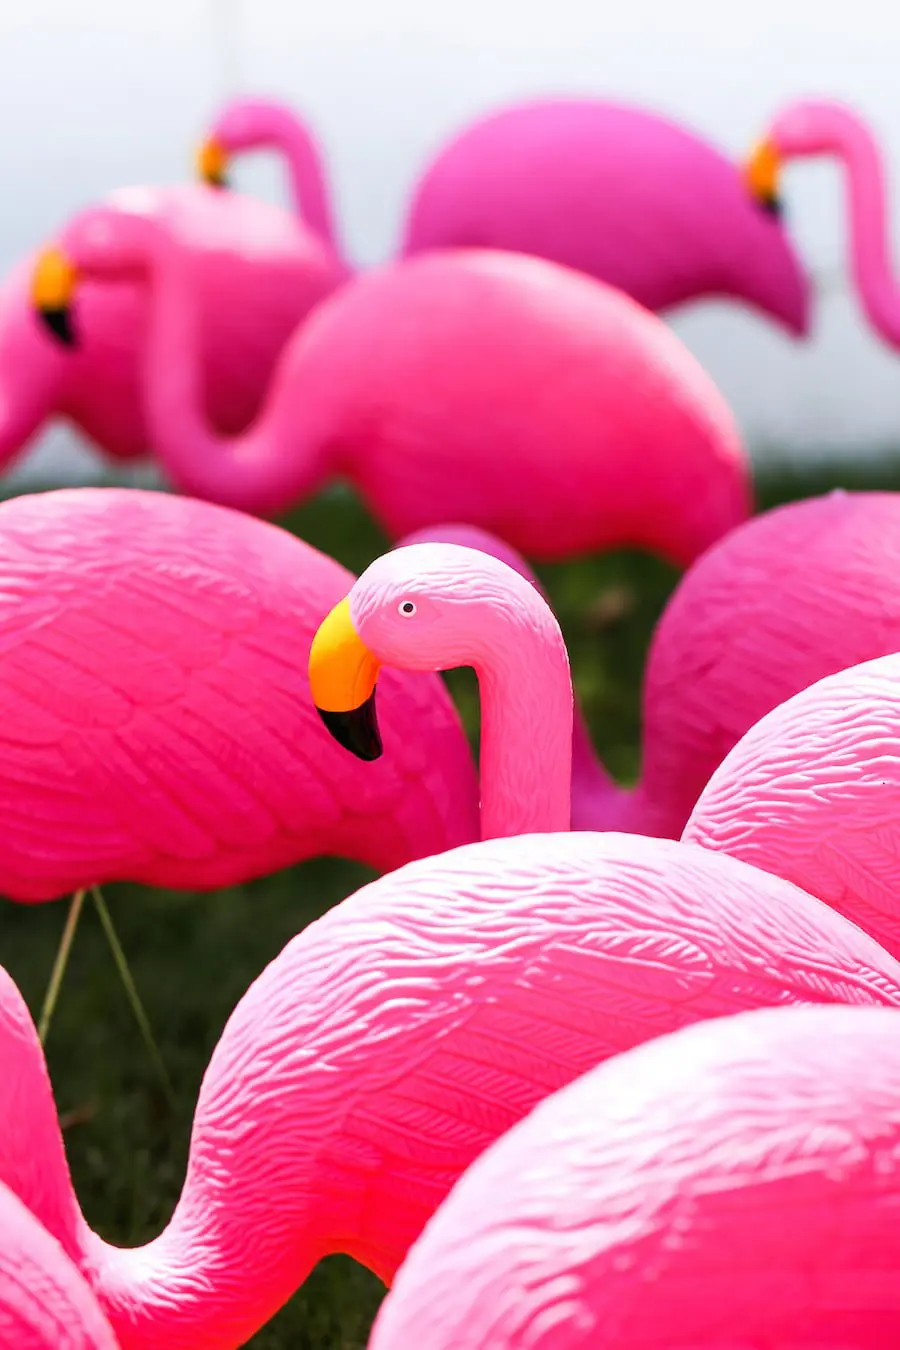 Happy Flocking Birthday with a Flamingo Flocking // Salty Canary 